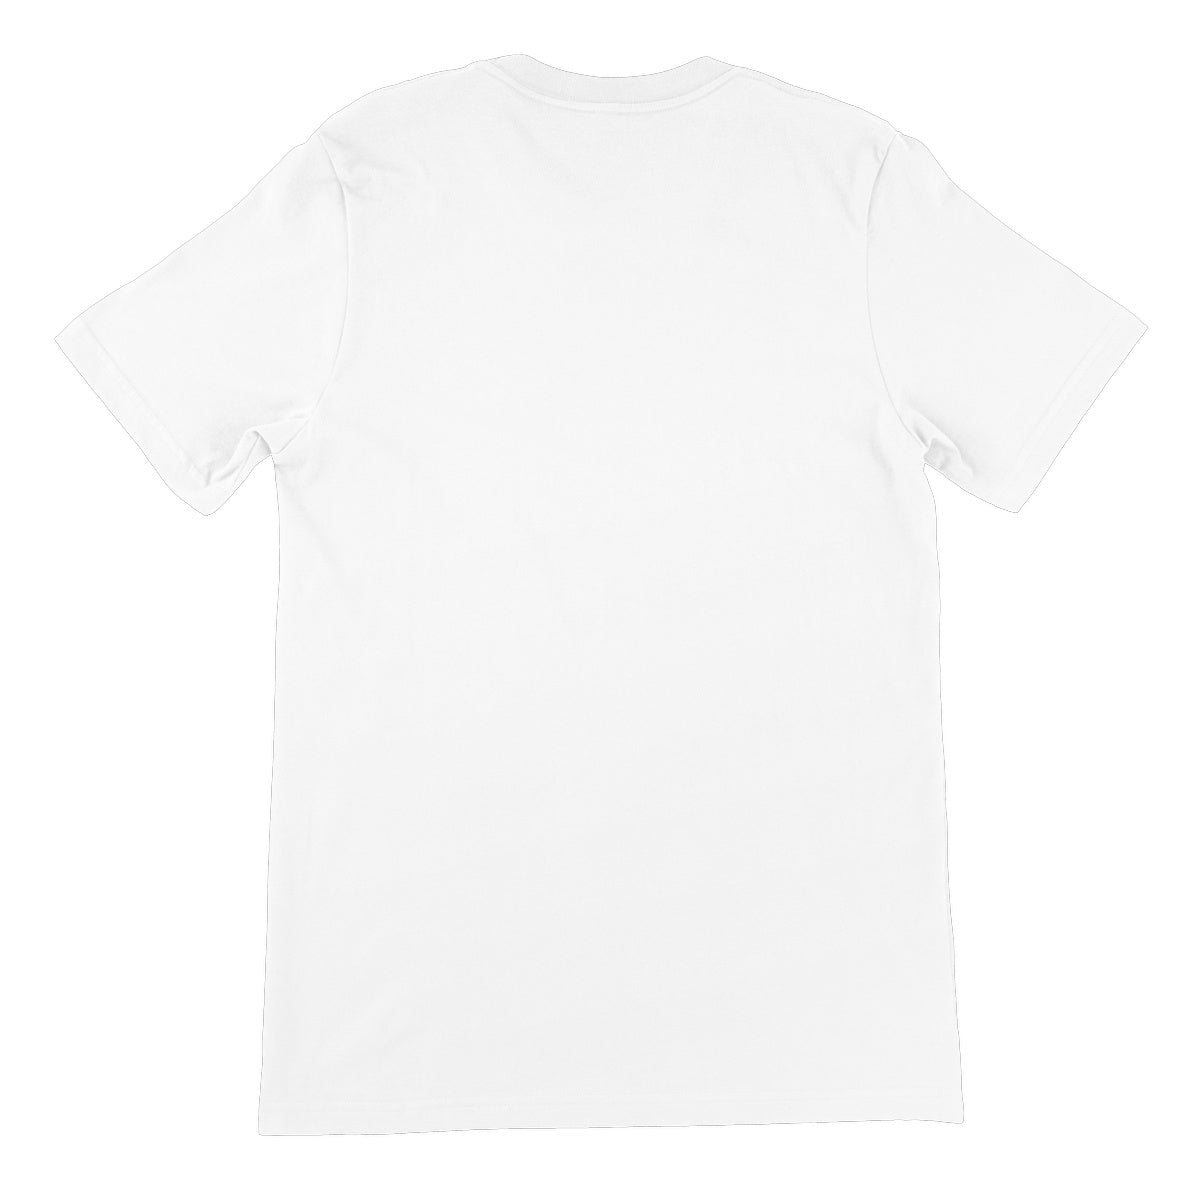 Möbius Flow, Twilight Sphere Unisex Short Sleeve T-Shirt